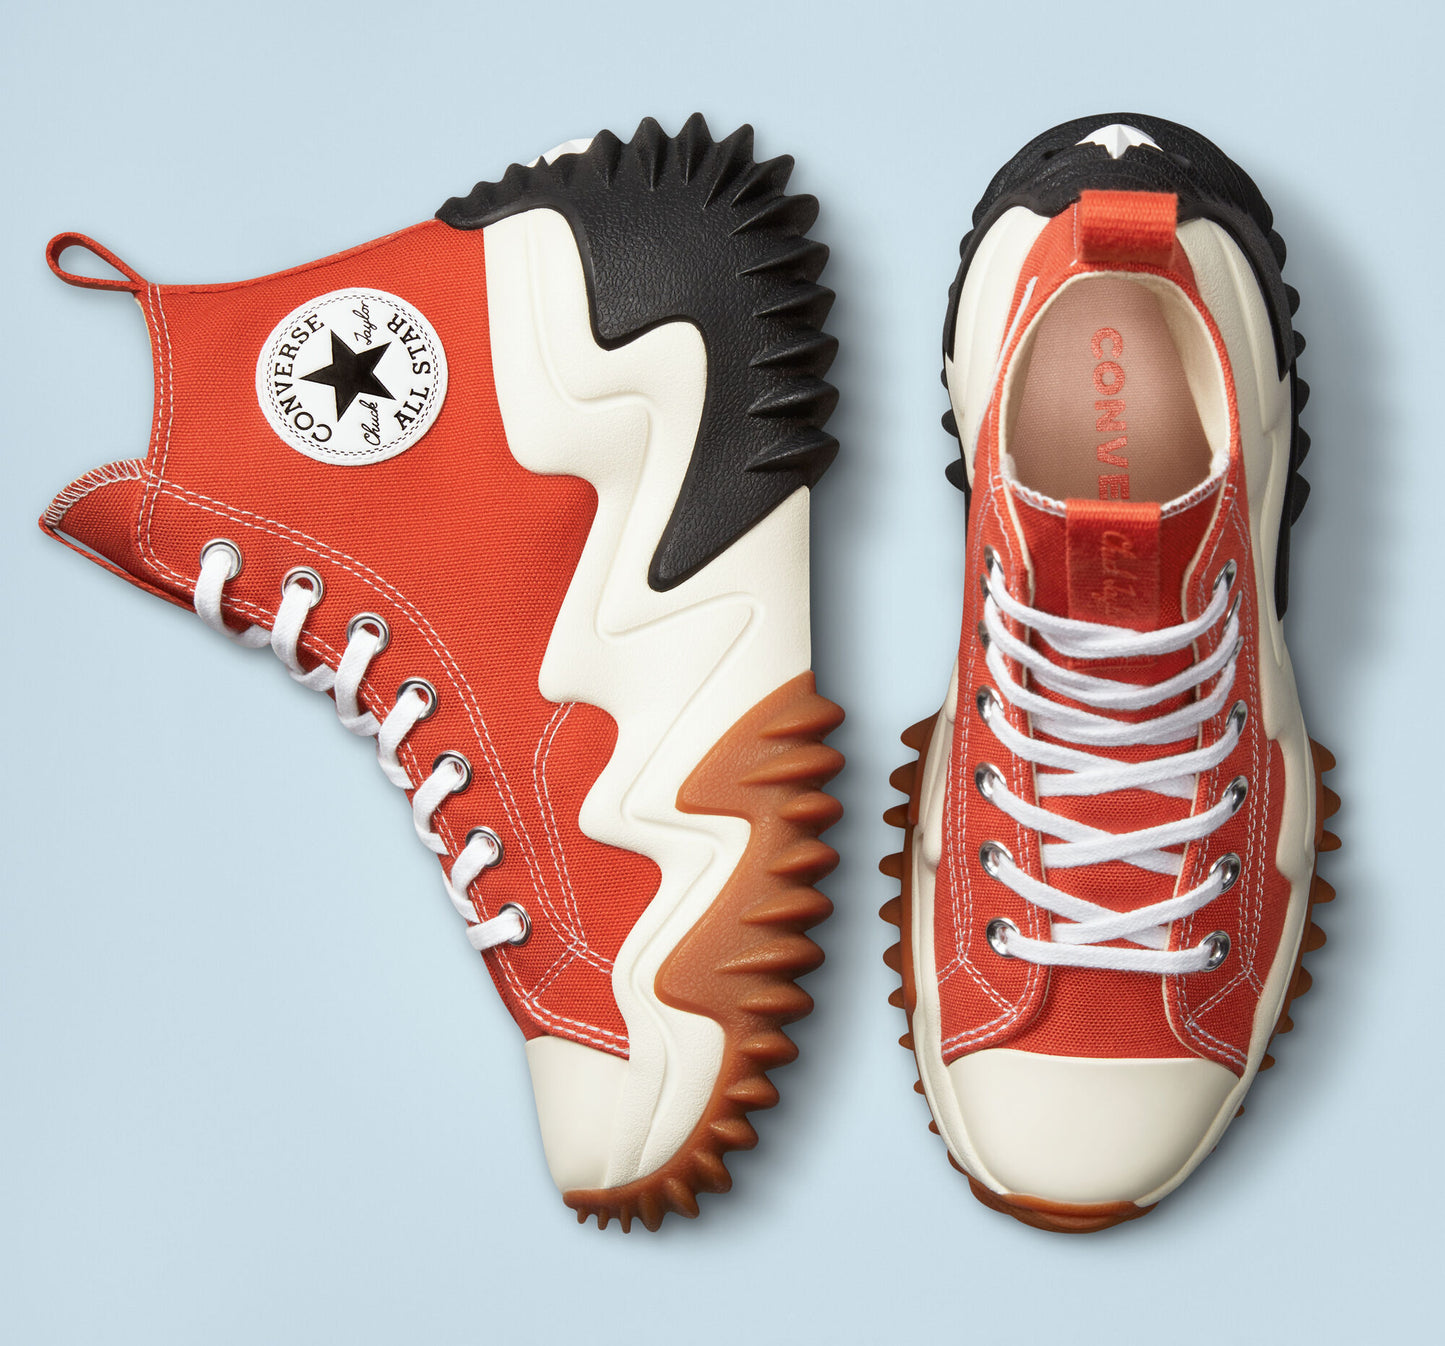 Converse Run Star Motion CX Platform Hi Tp Shoe, A01174C Multi Sizes Mantra Orange/Black/Egret